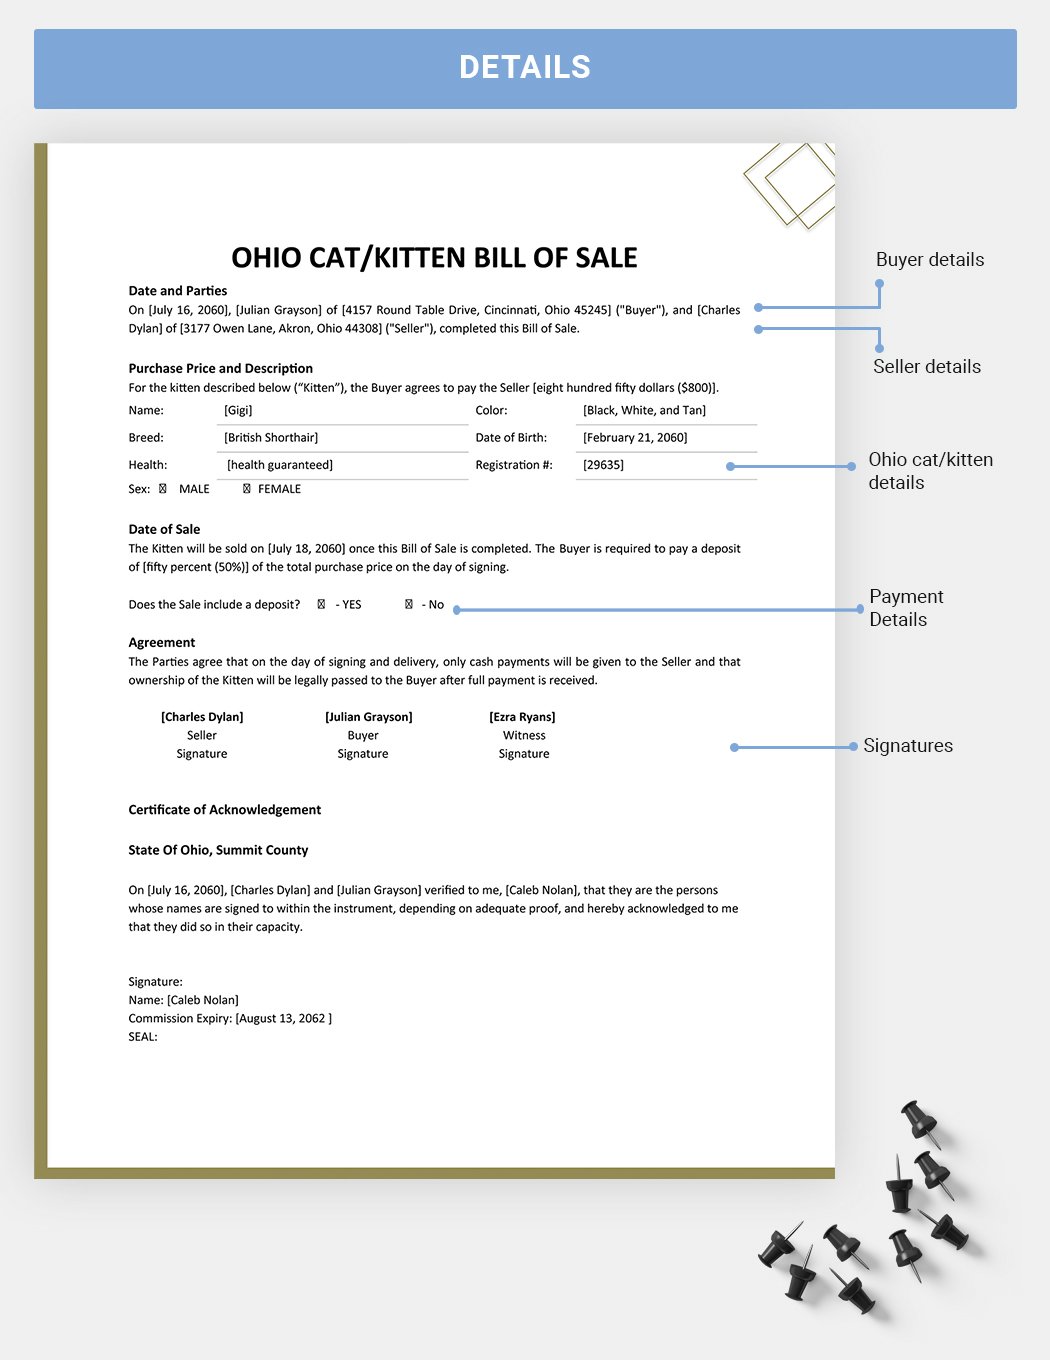 Ohio Cat / Kitten Bill Of Sale Template